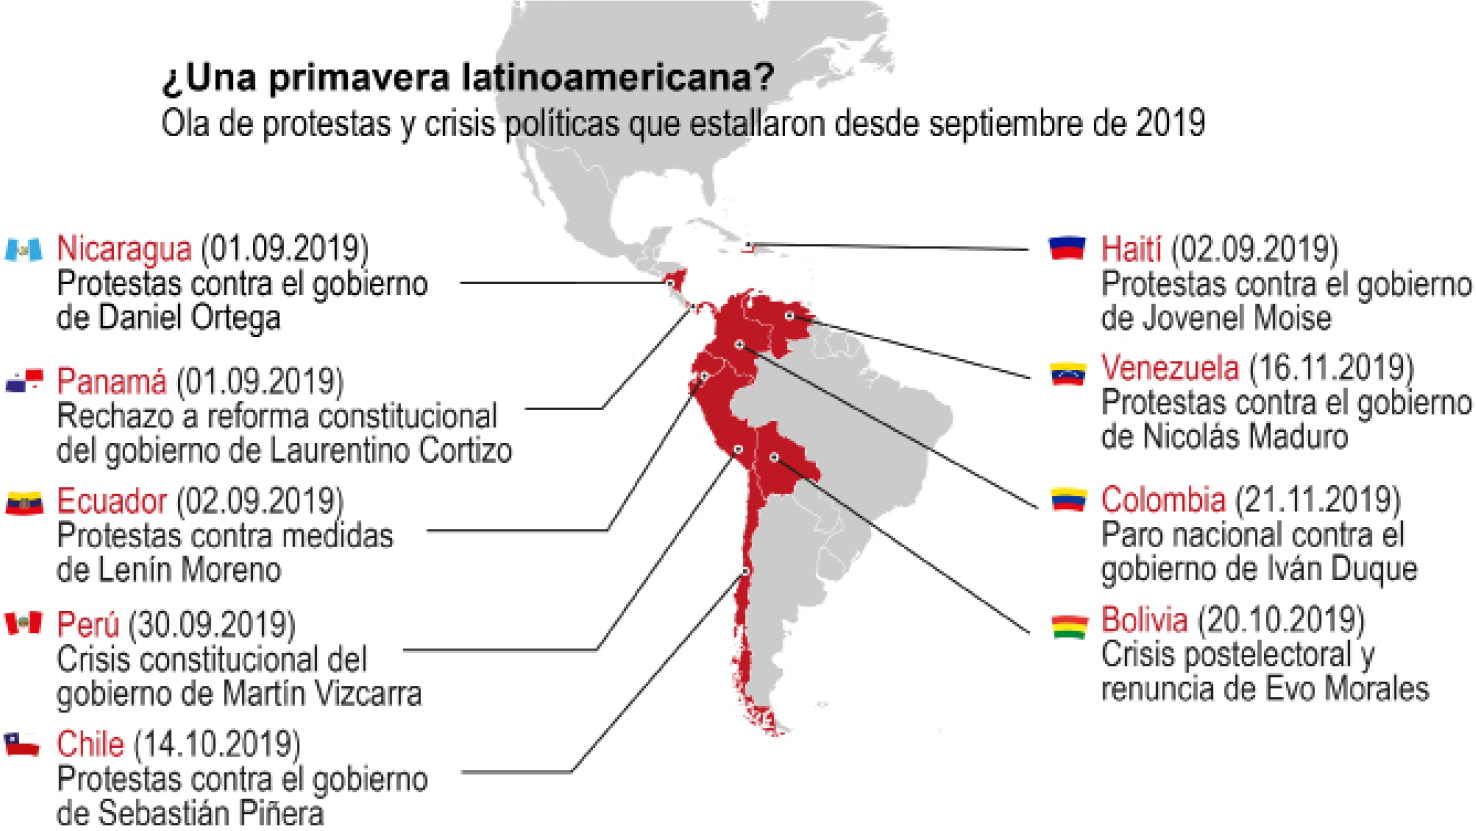 Ola de protestas
en América Latina "Primavera Latinoamericana"